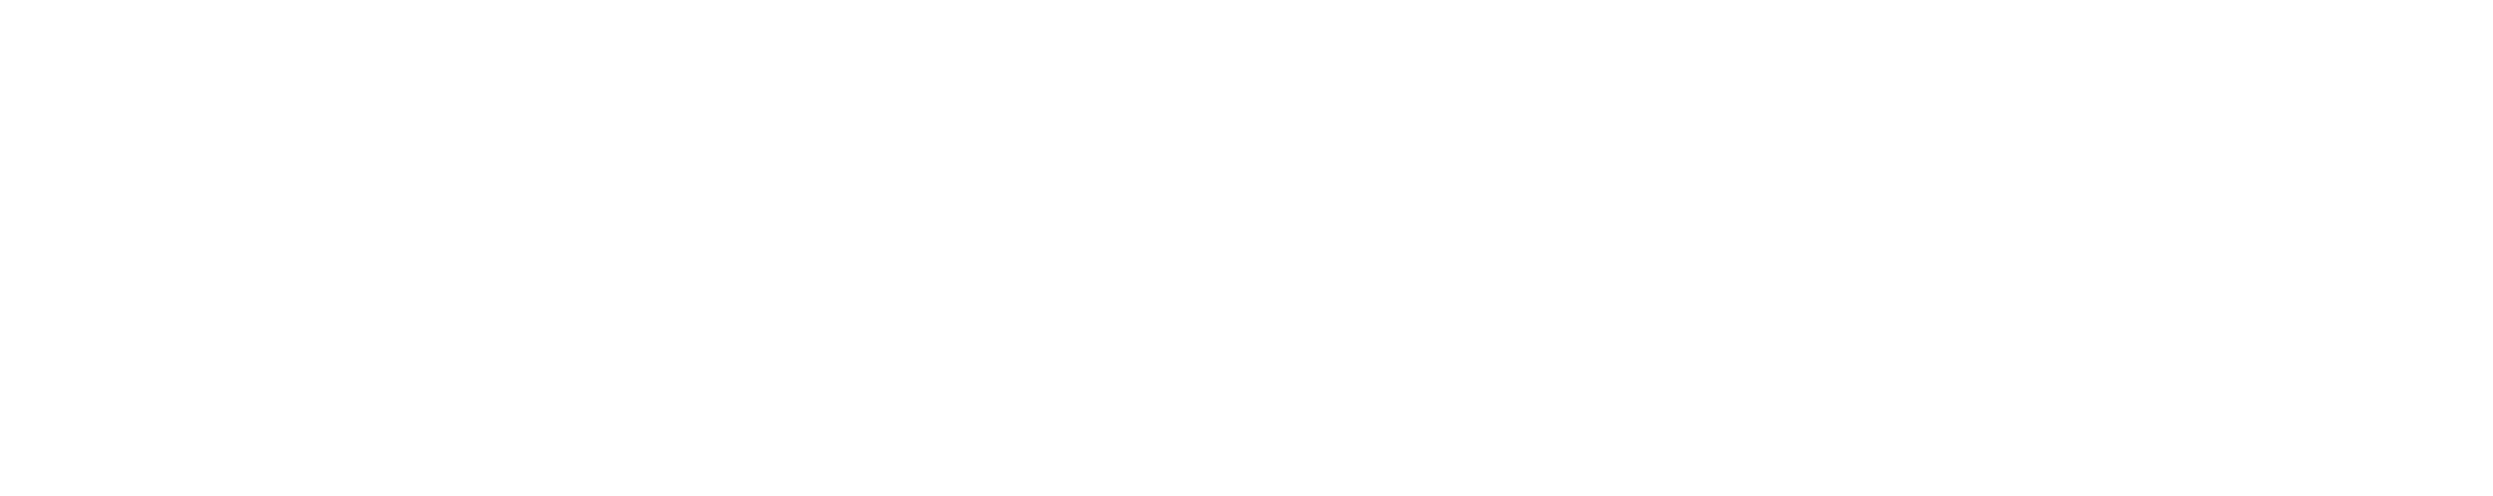 Live Stories logo